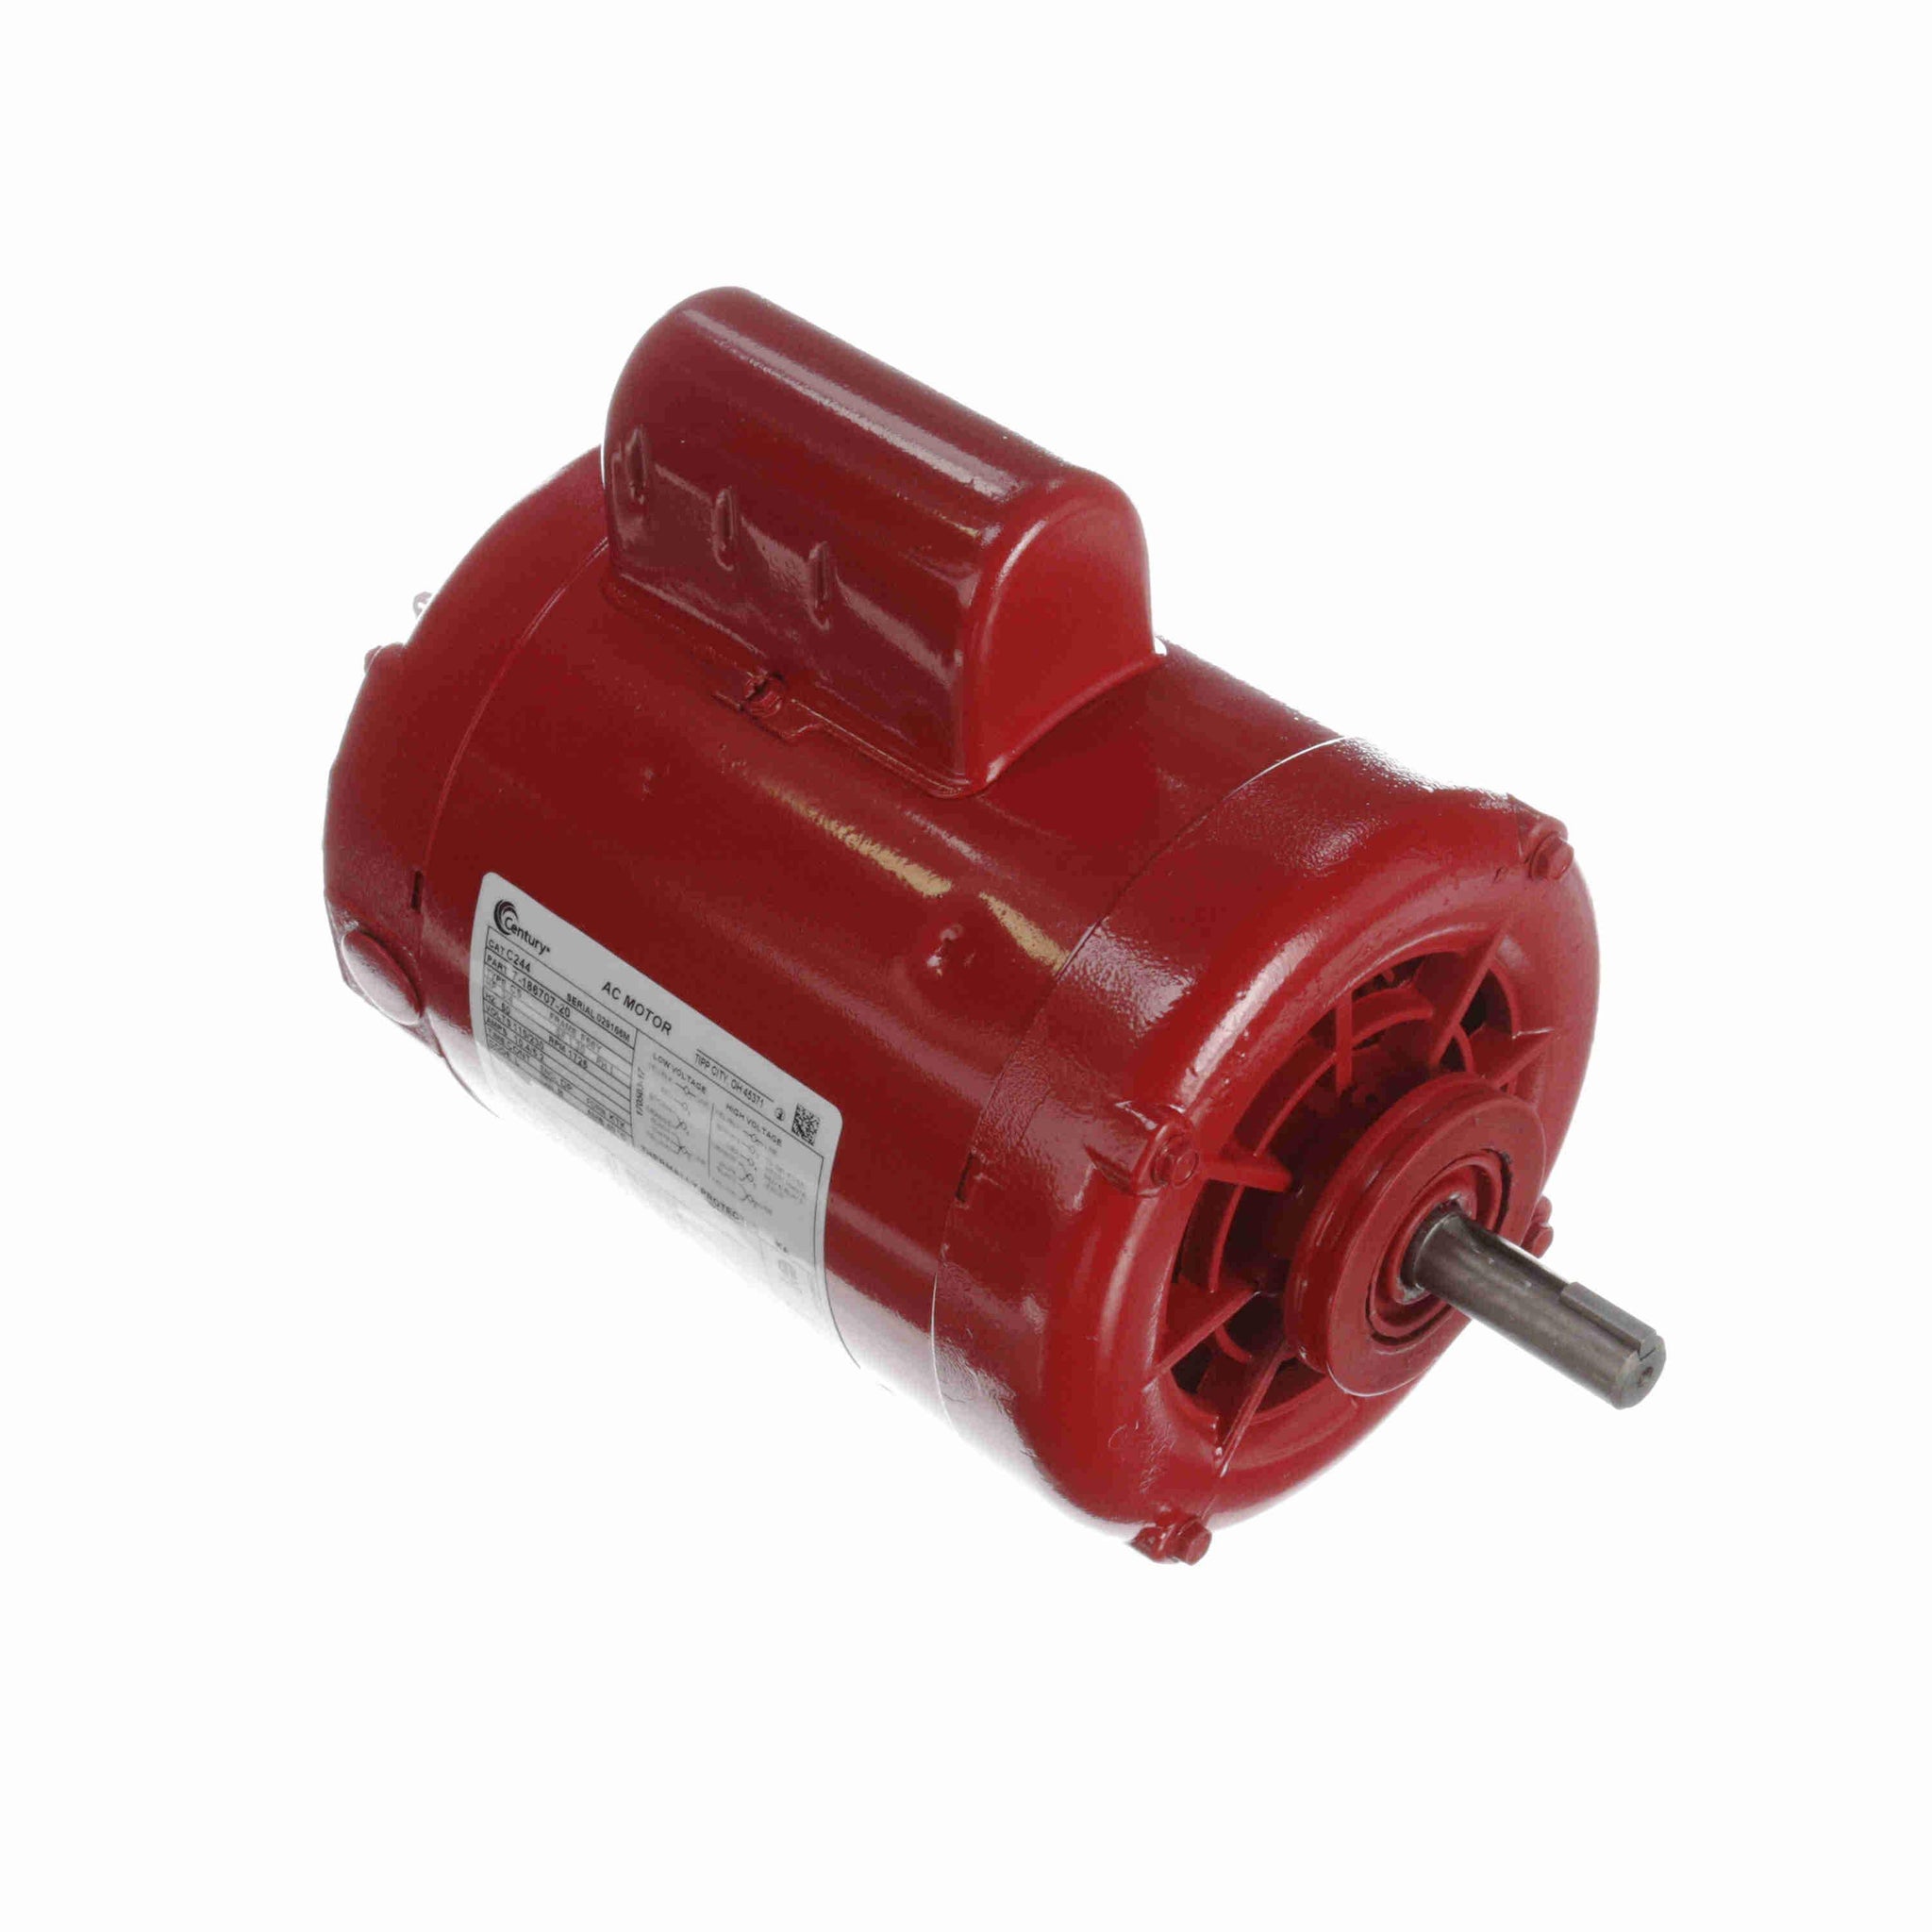 C244 -  3/4 HP Circulator pump Motor, 1 phase, 1800 RPM, 115/230 V, 56Y Frame, ODP - Hardware & Moreee